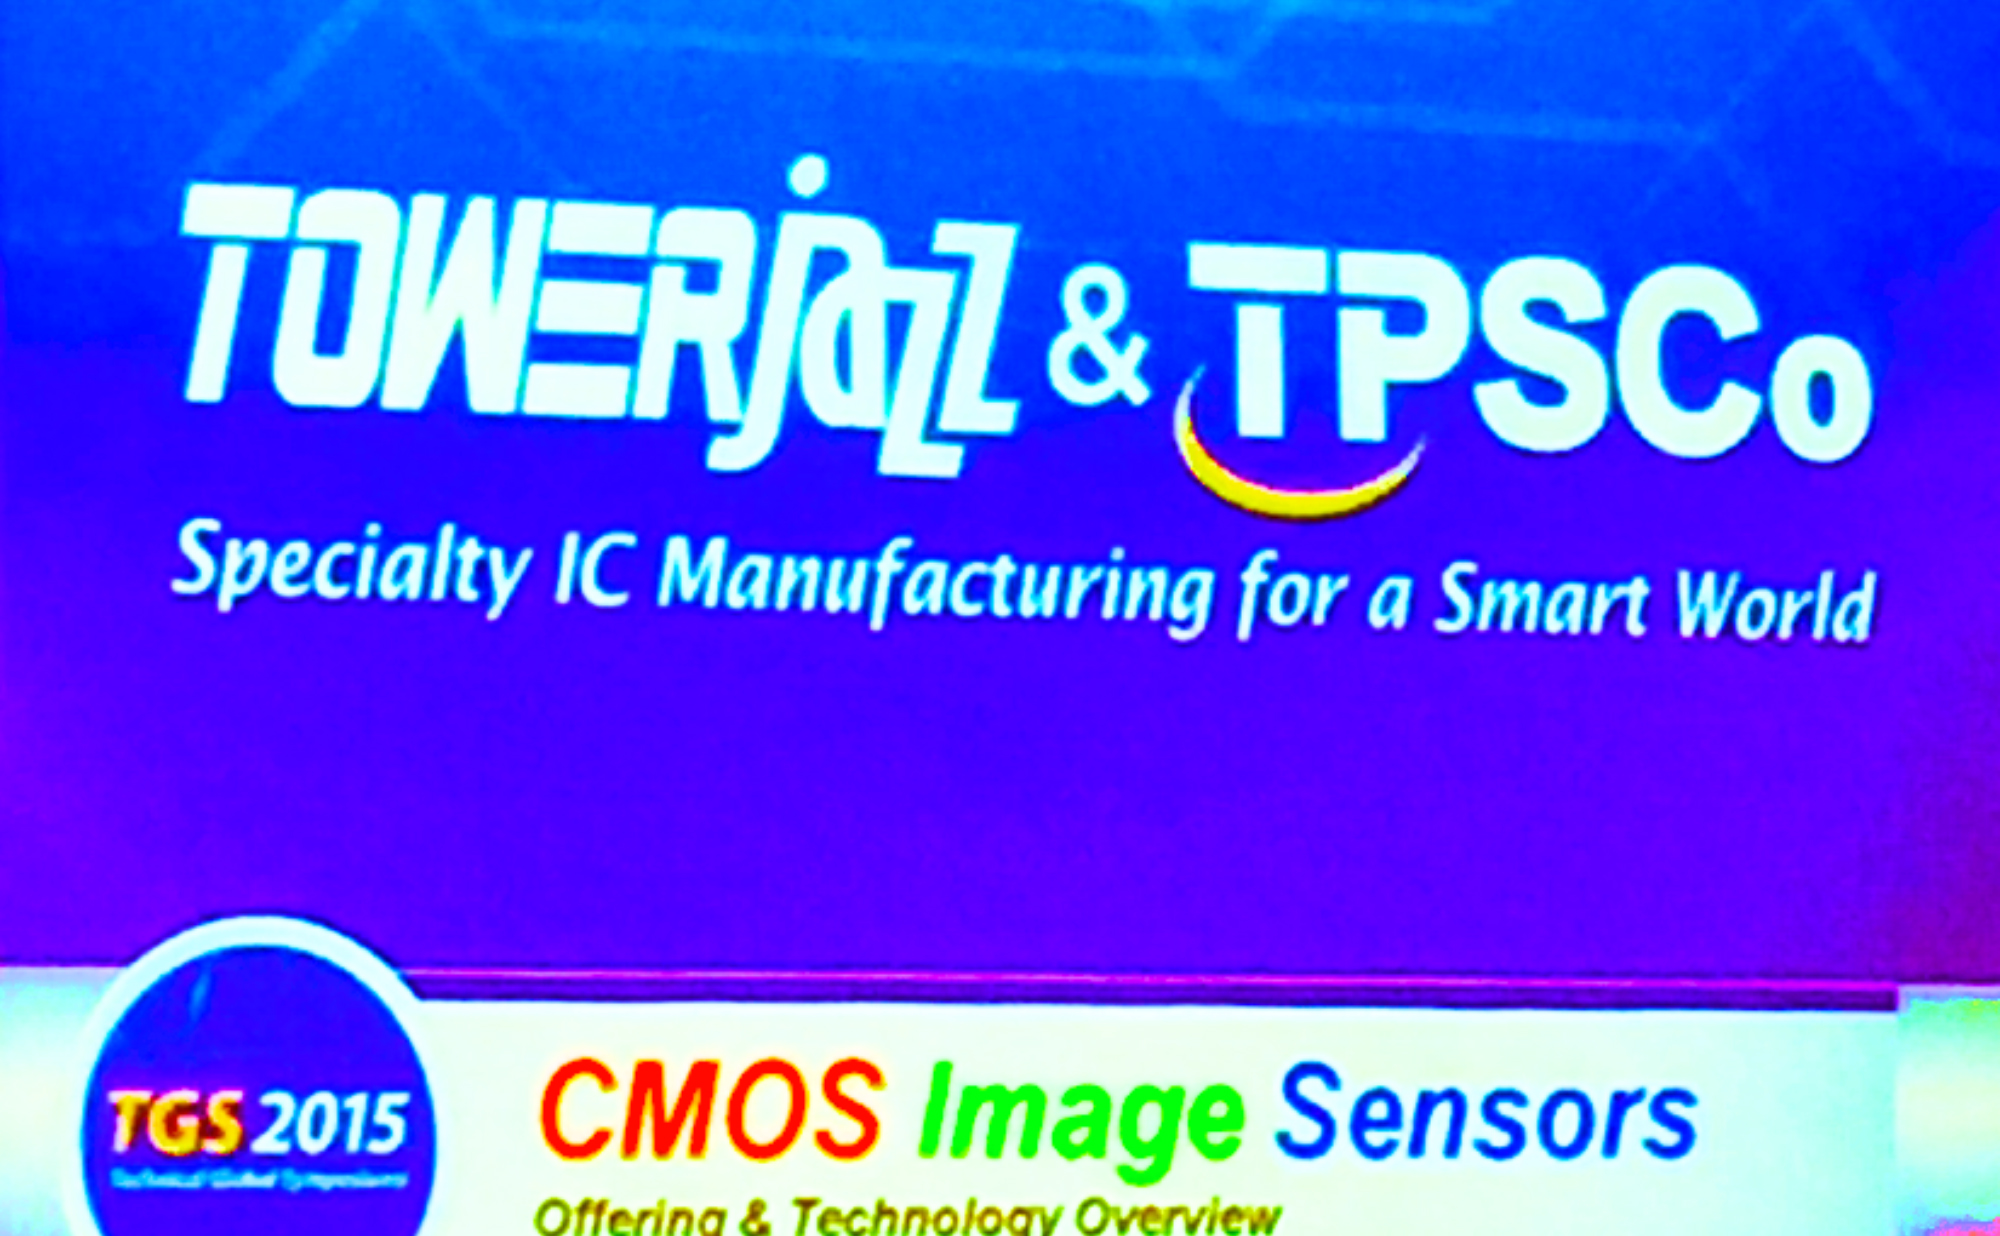 TowerJazz to acquire three of Panasonic’s semiconductor fabs (Nikkei headline)